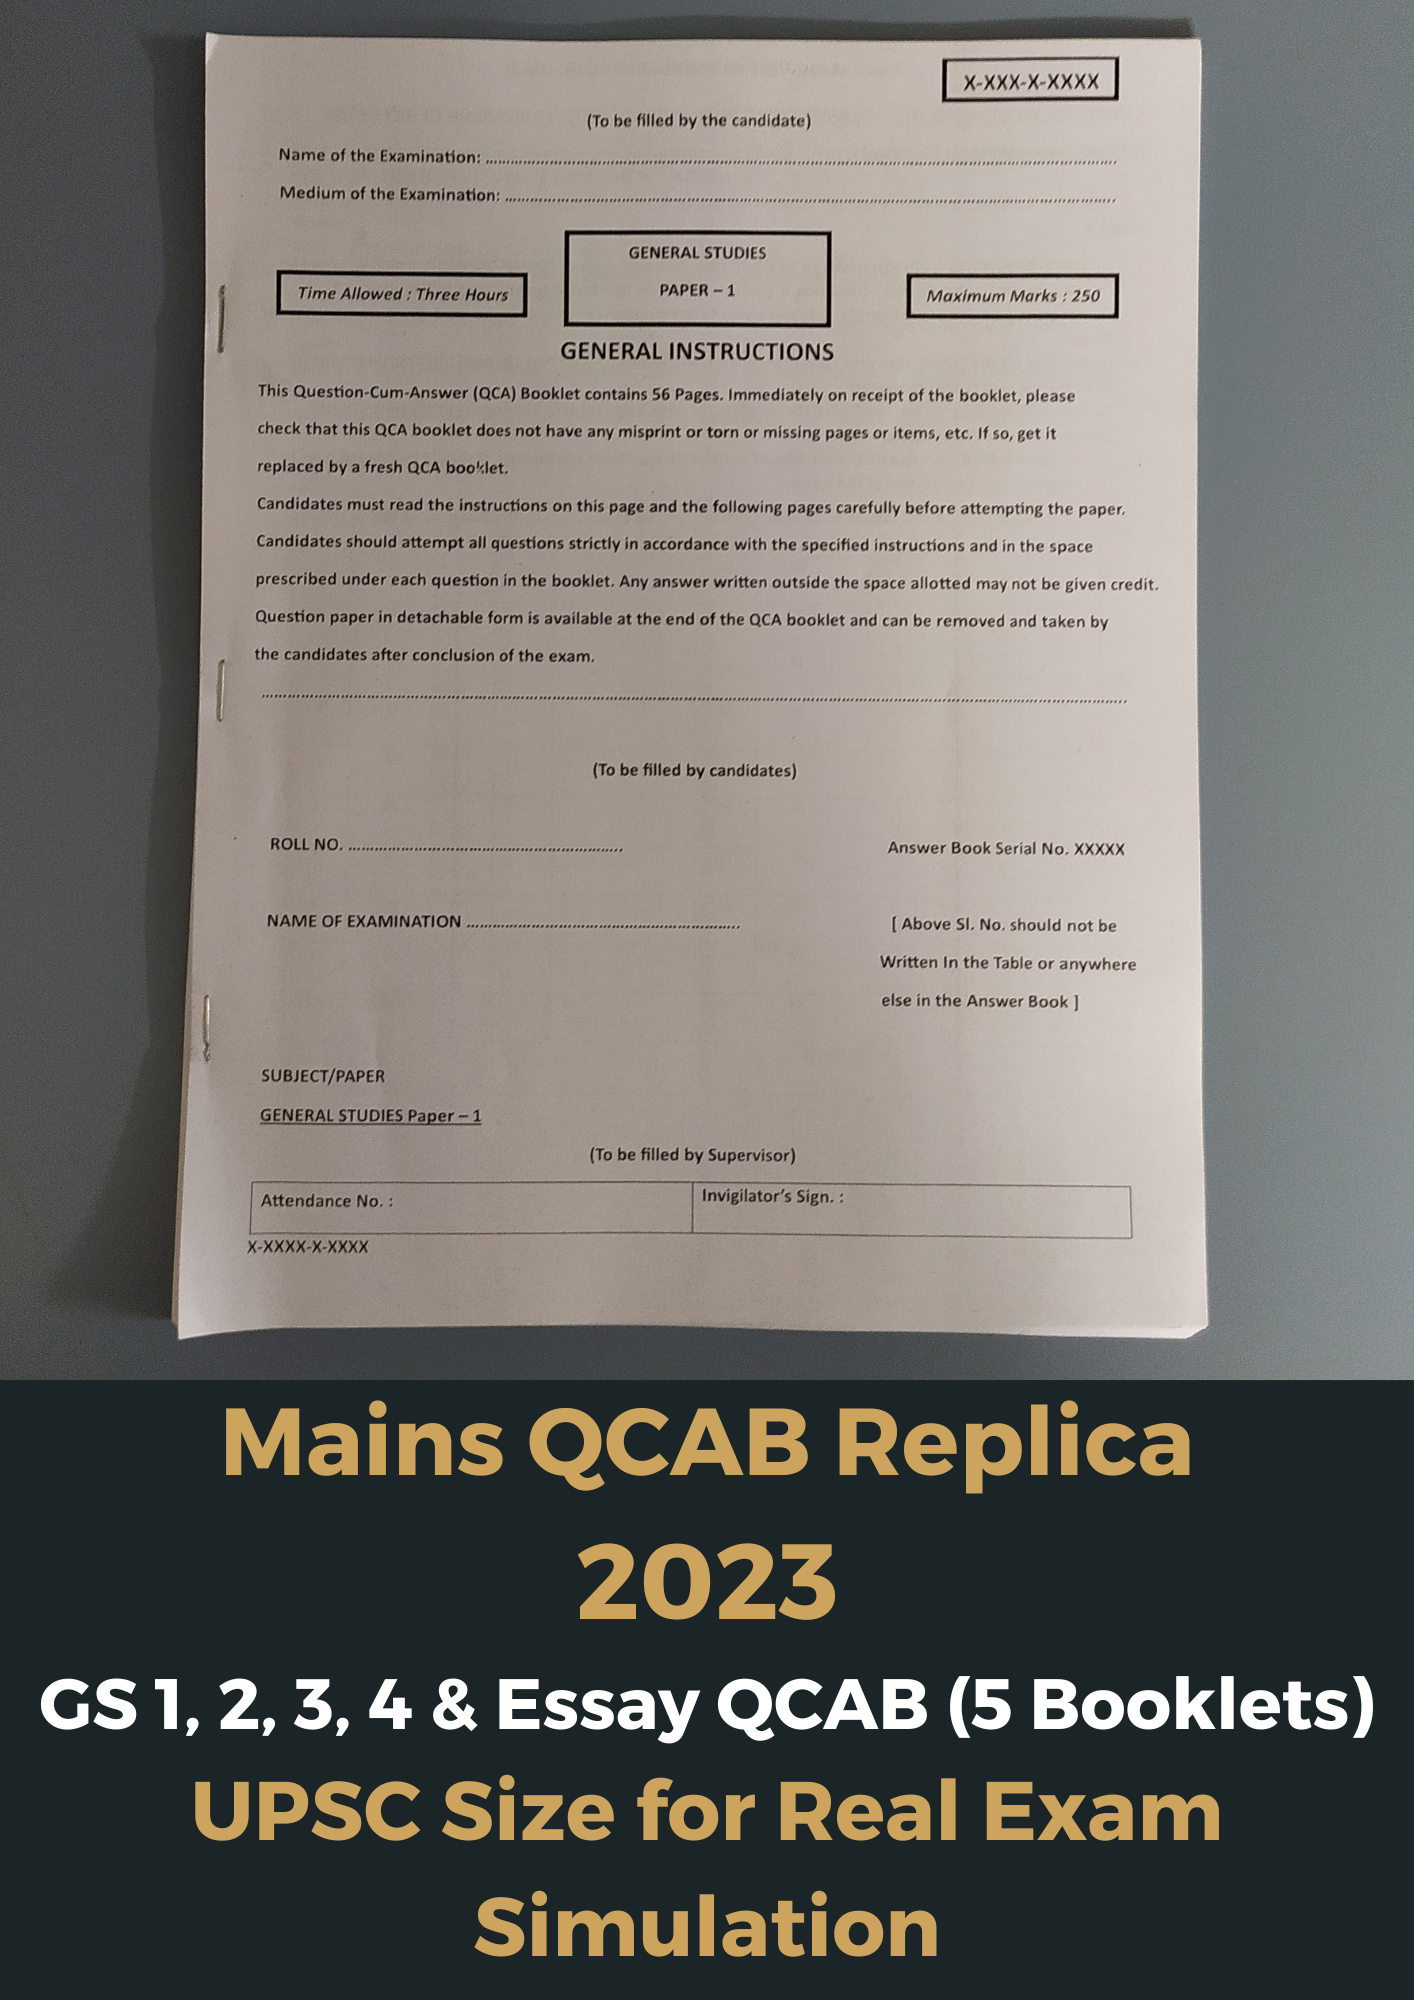 2023 Mains QCAB Replica - GS 1,2,3,4 & Essay (5 Booklets) - UPSC QCAB Size - For Real Exam Simulation